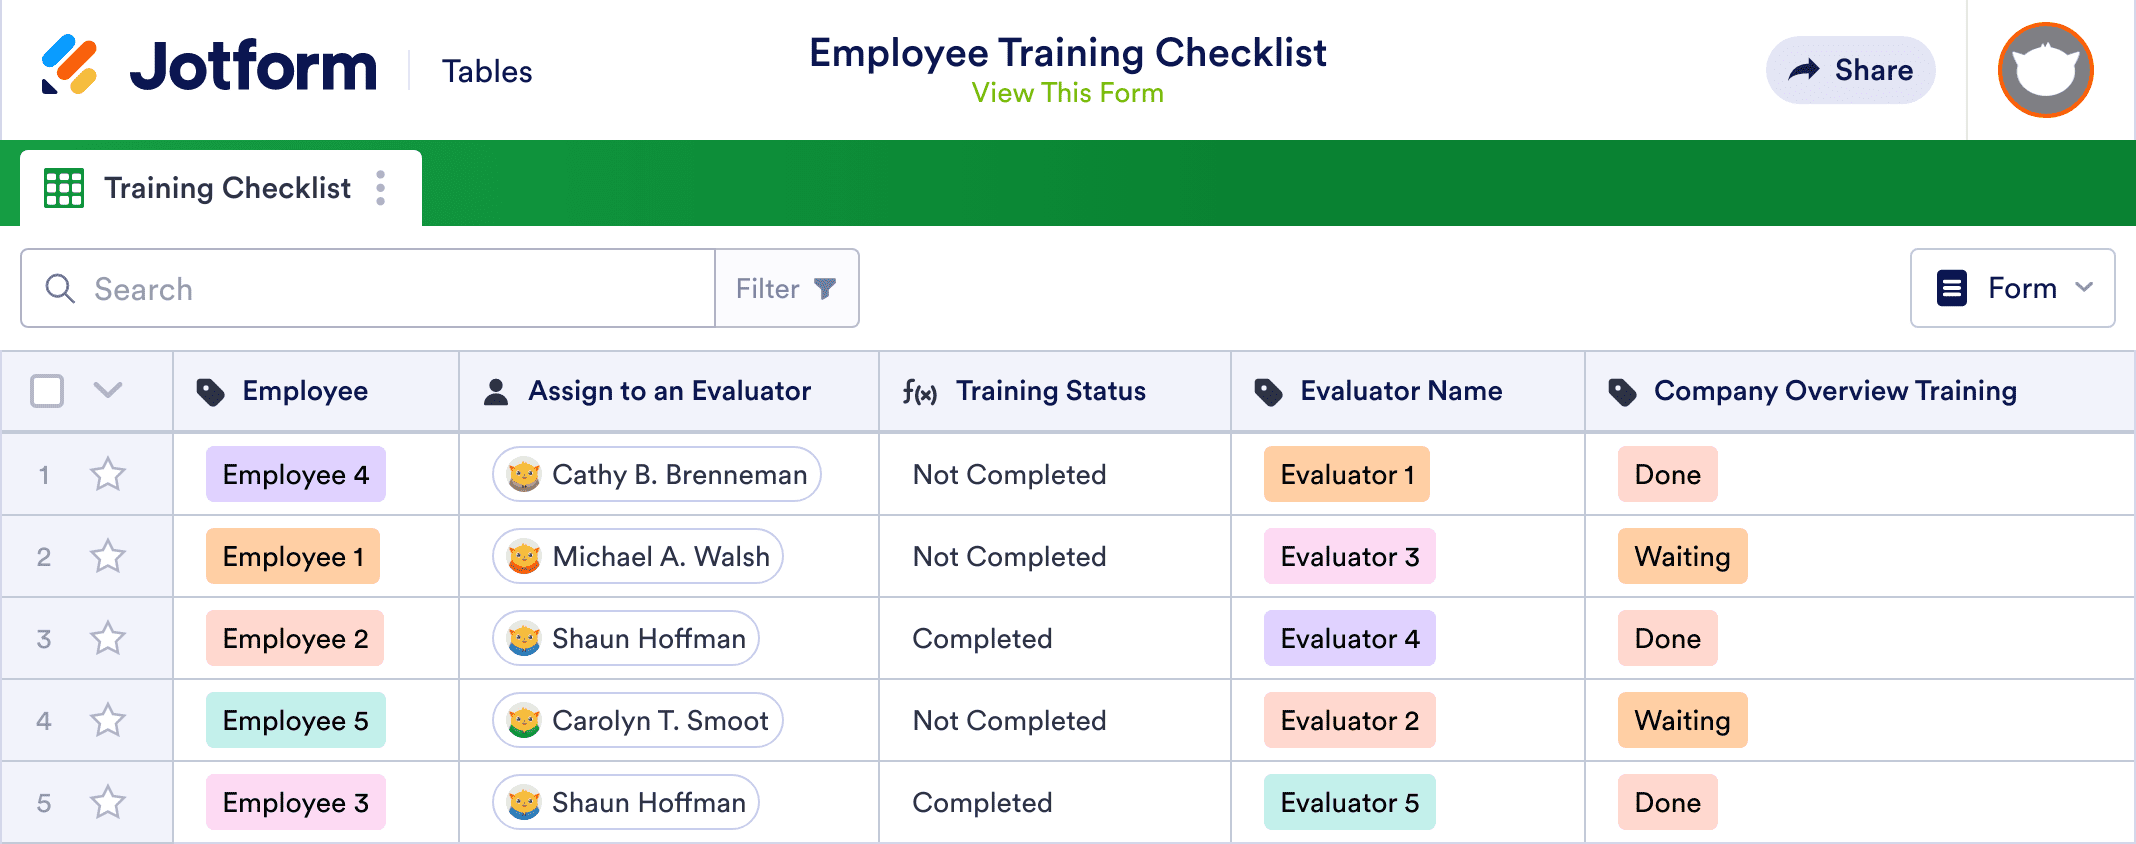 Employee Training Checklist Template